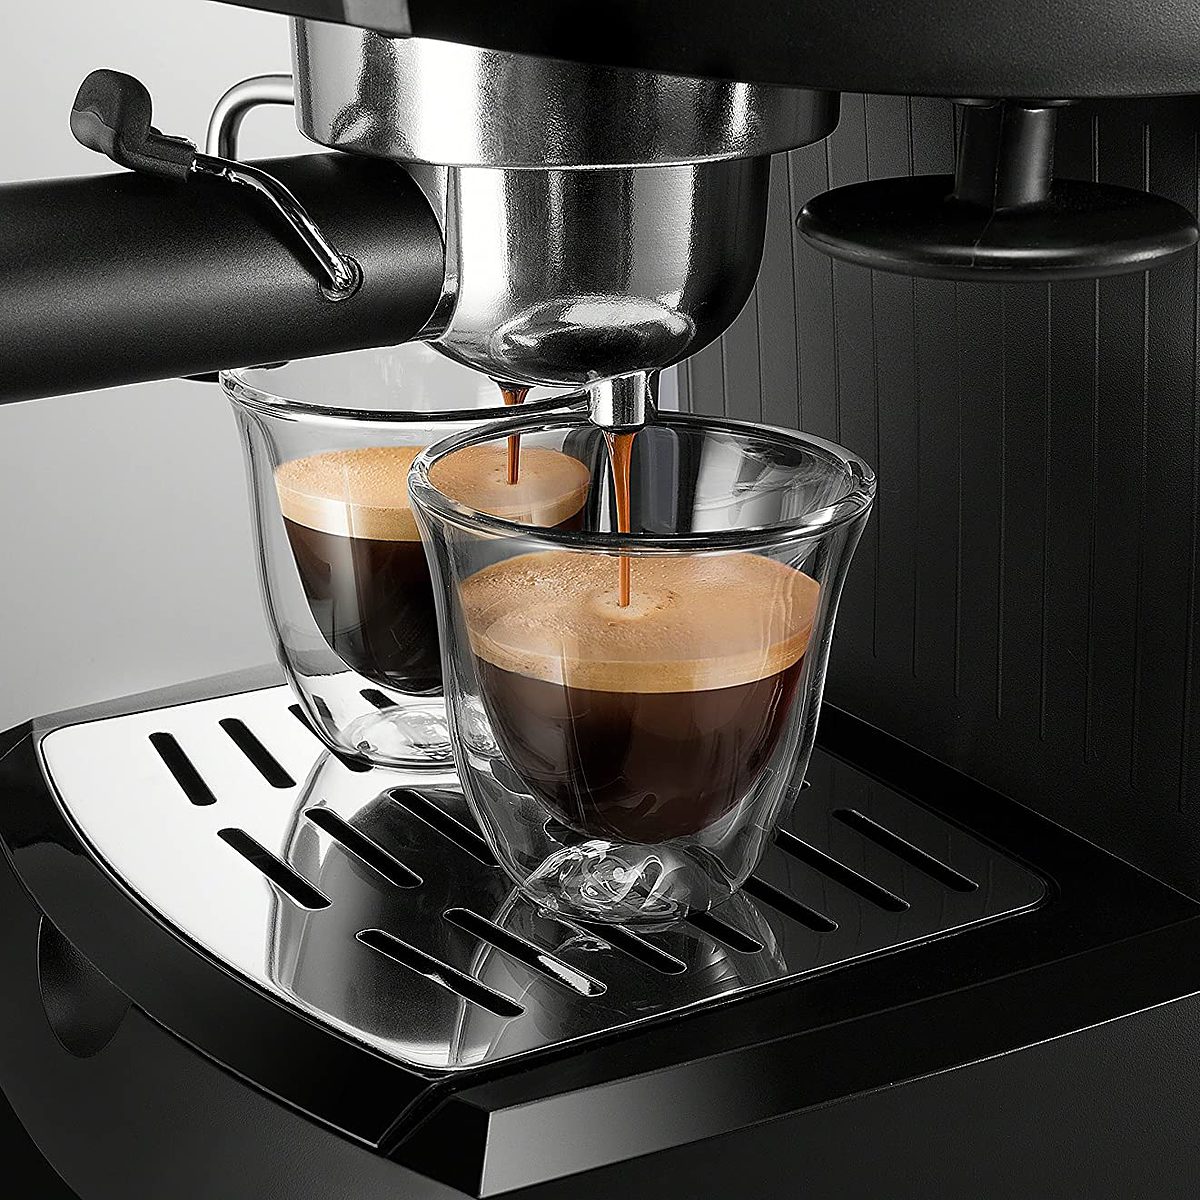 Delonghi EC155 Espresso Machine Making Two Shots